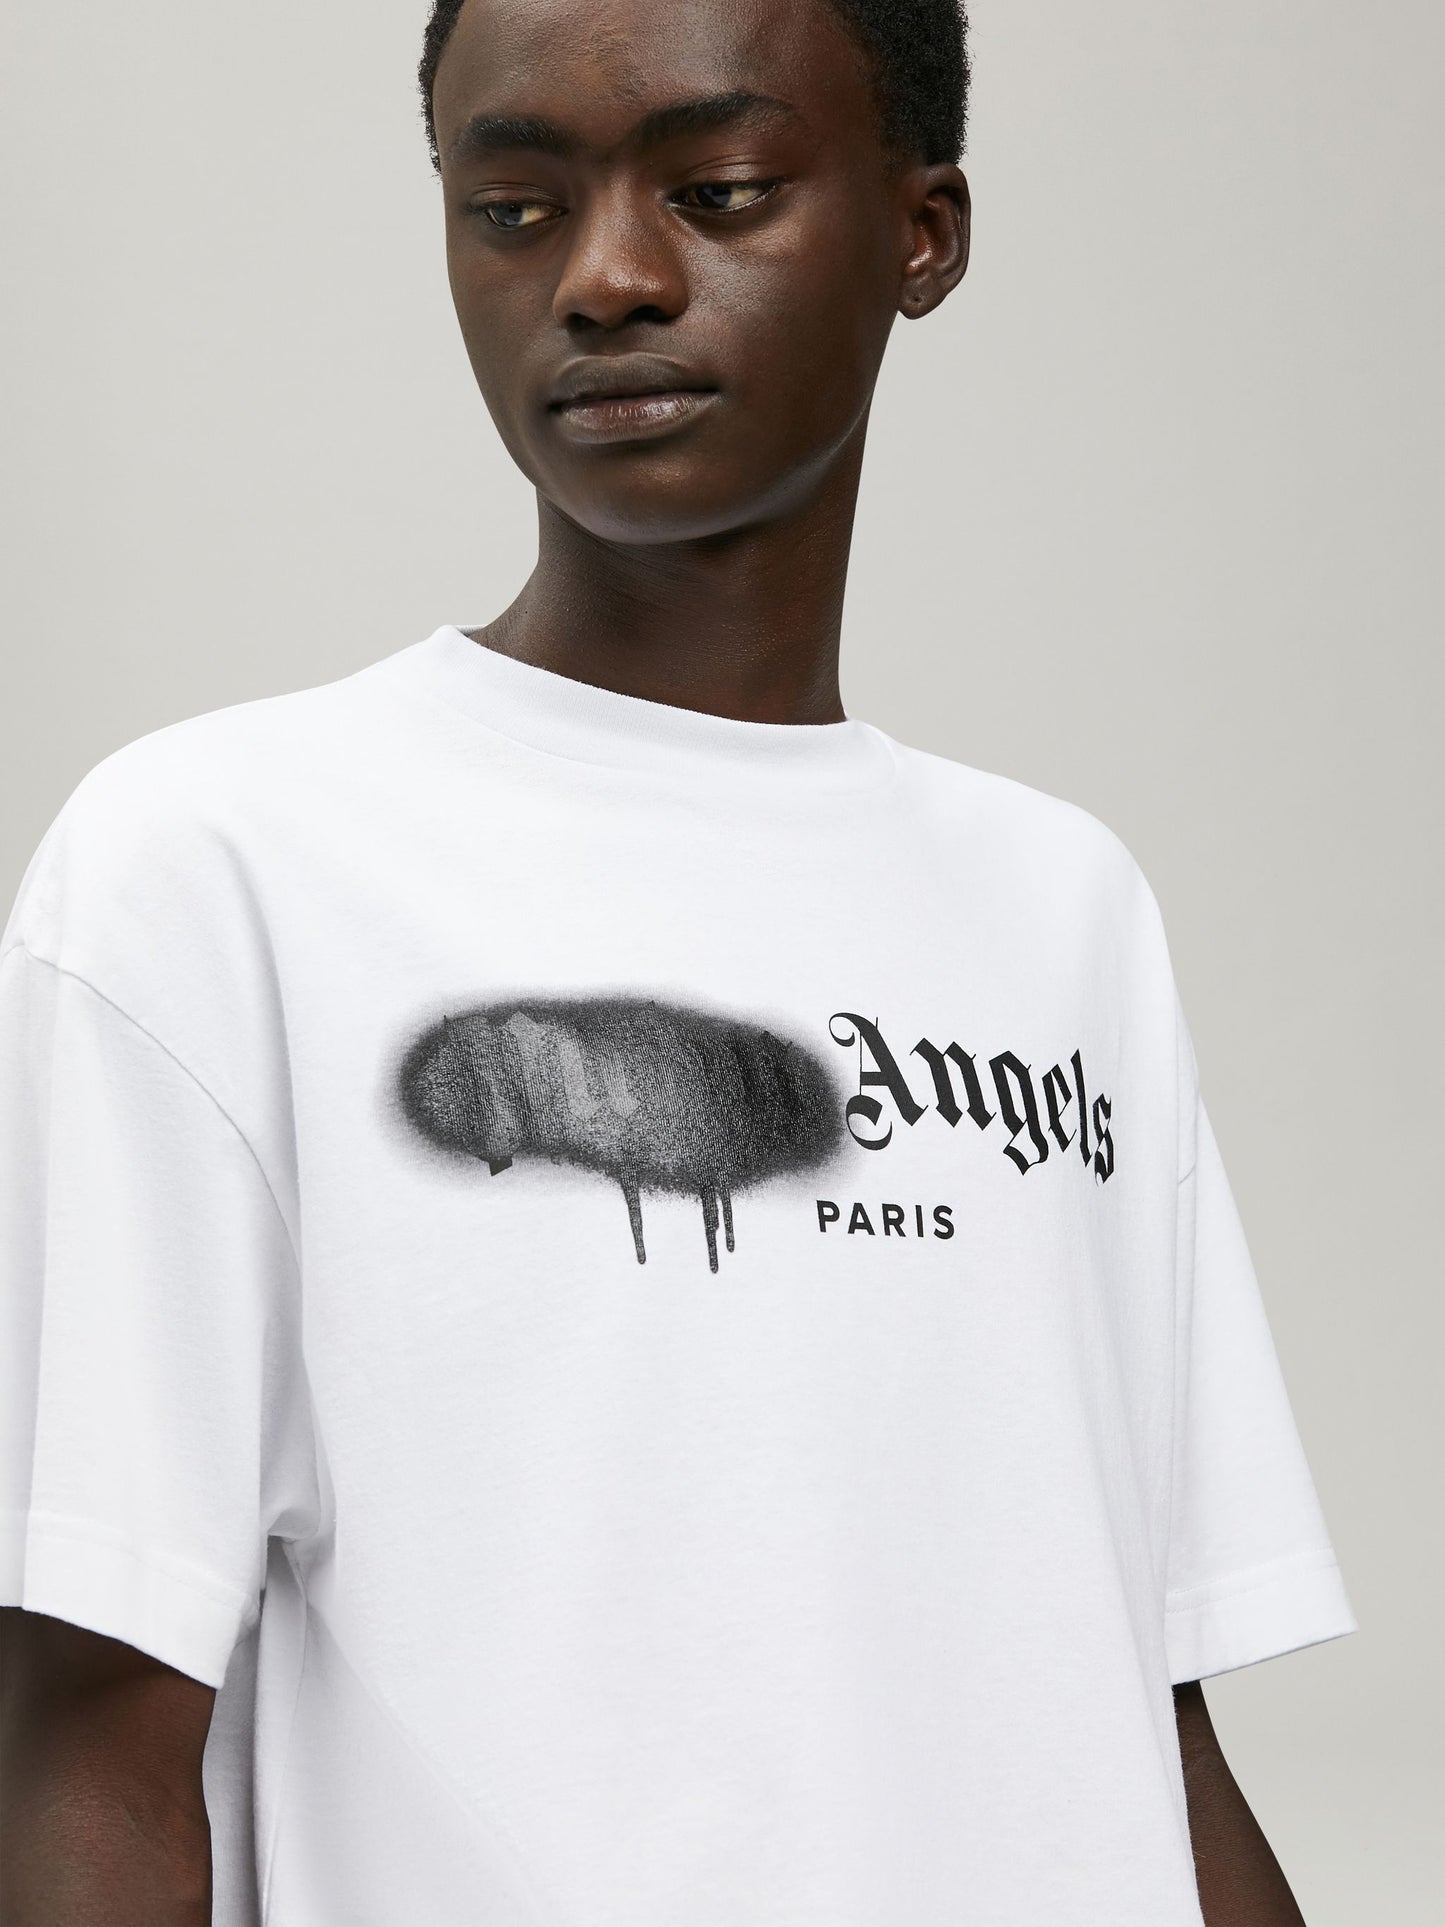 Palm Angels Paris Sprayed T-Shirt White/Black